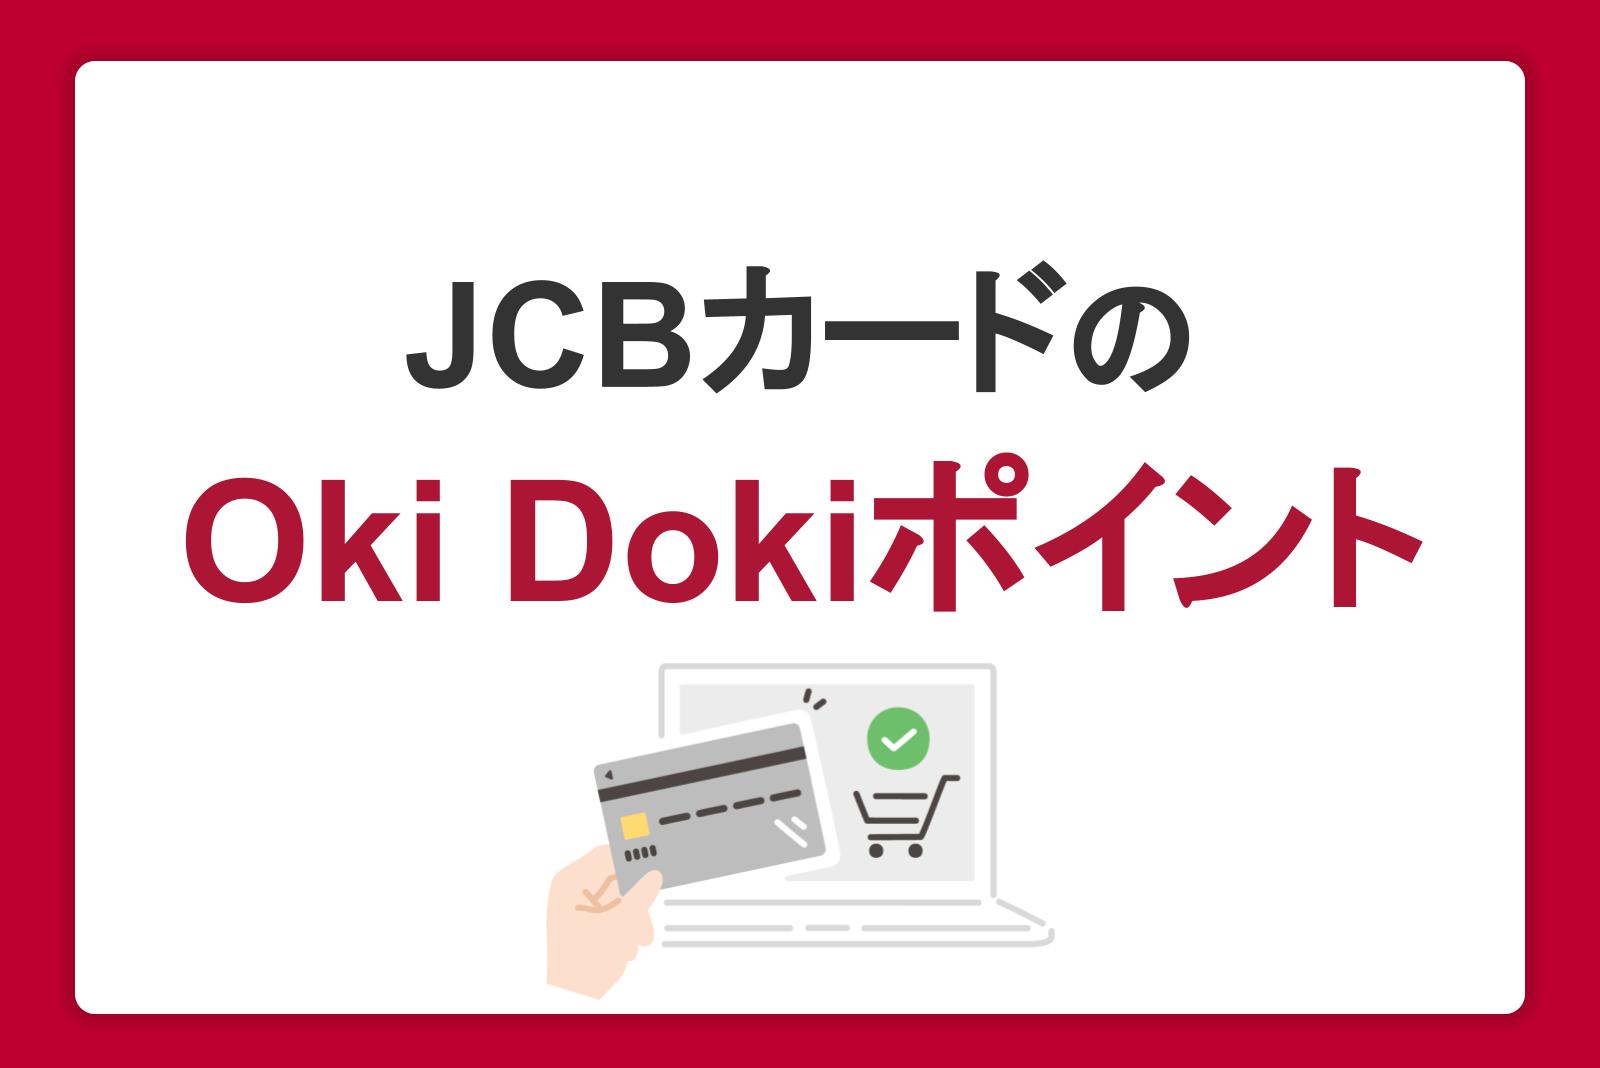 JCBカードのOki Dokiポイントのおトクな使い方とは？ため方や交換方法も紹介